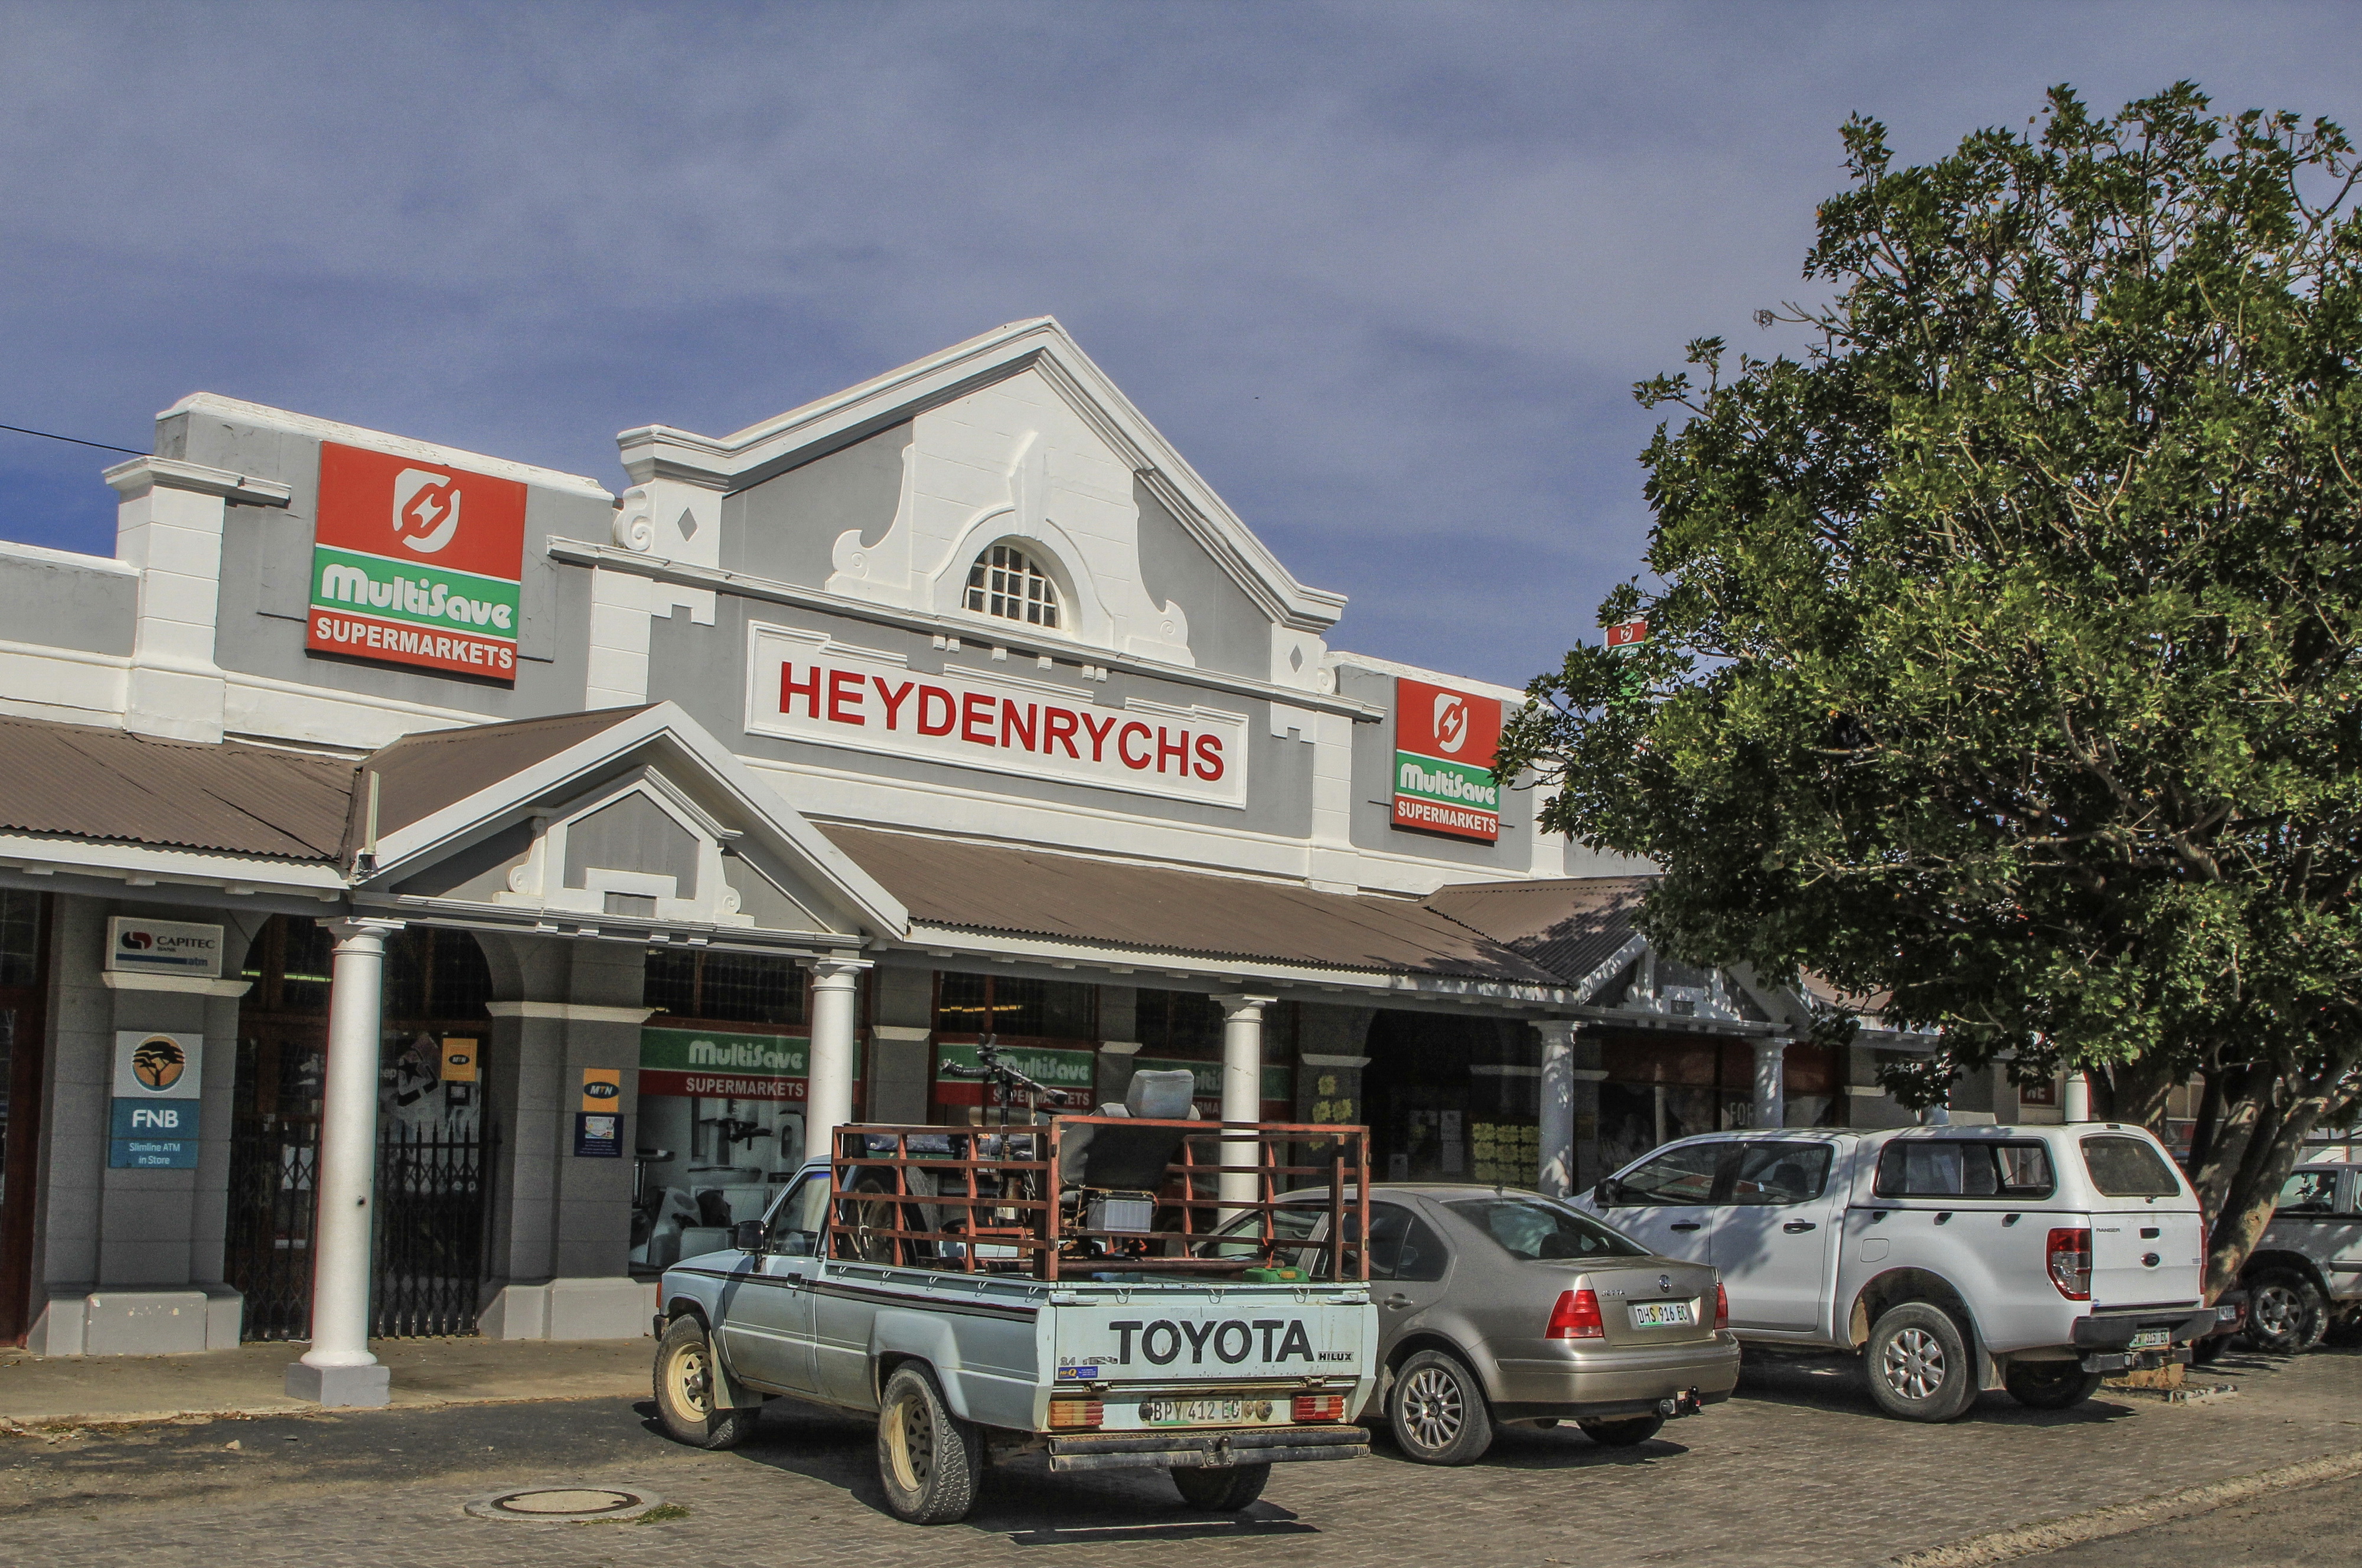 Everyone shops at Heyndenrychs. Image: Chris Marais